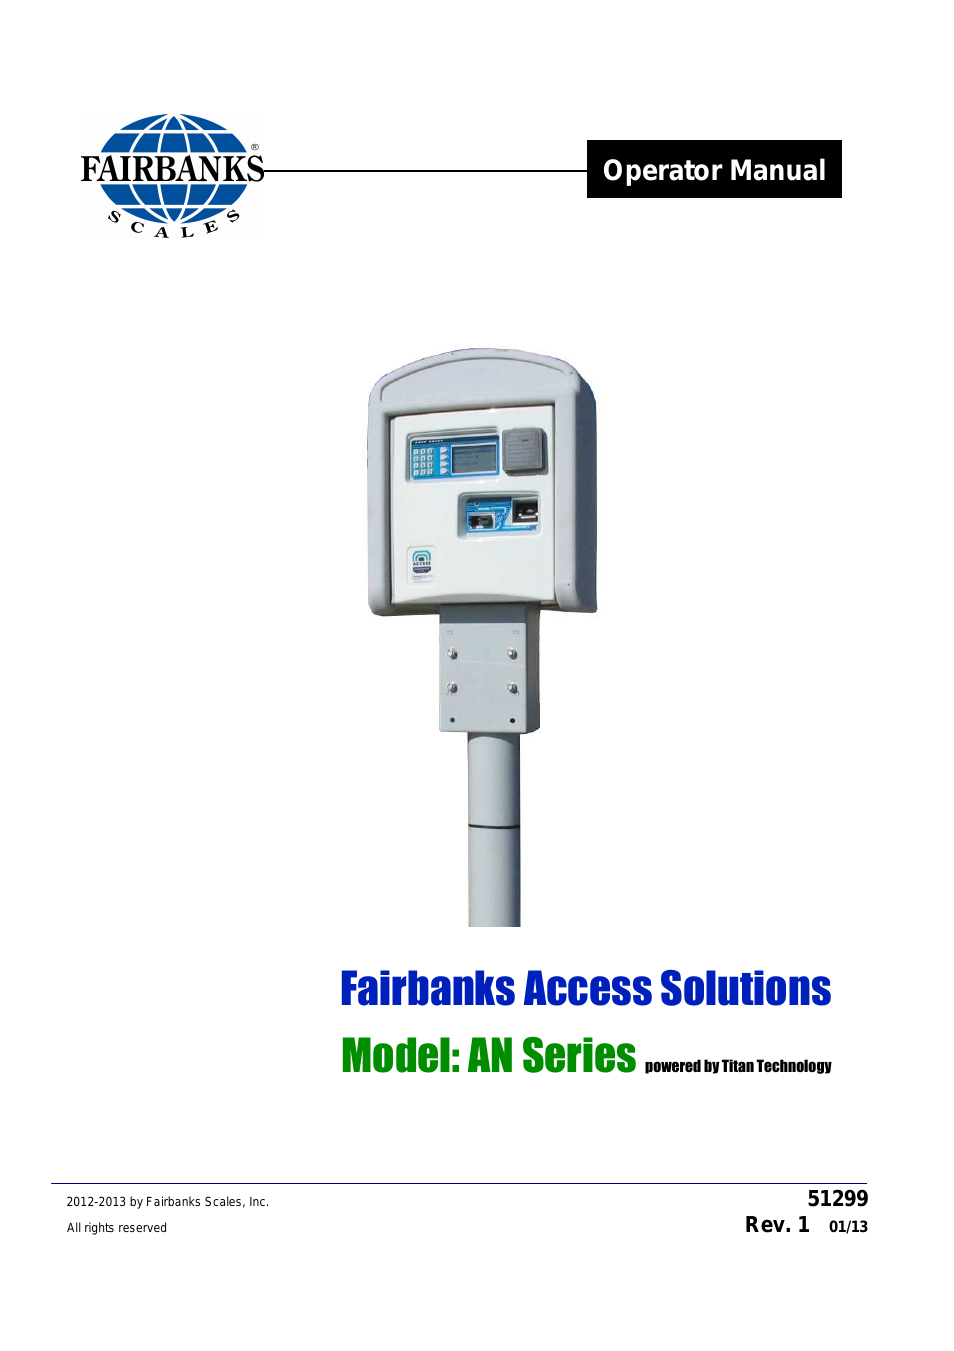 AN Series Fairbanks Access Solutions